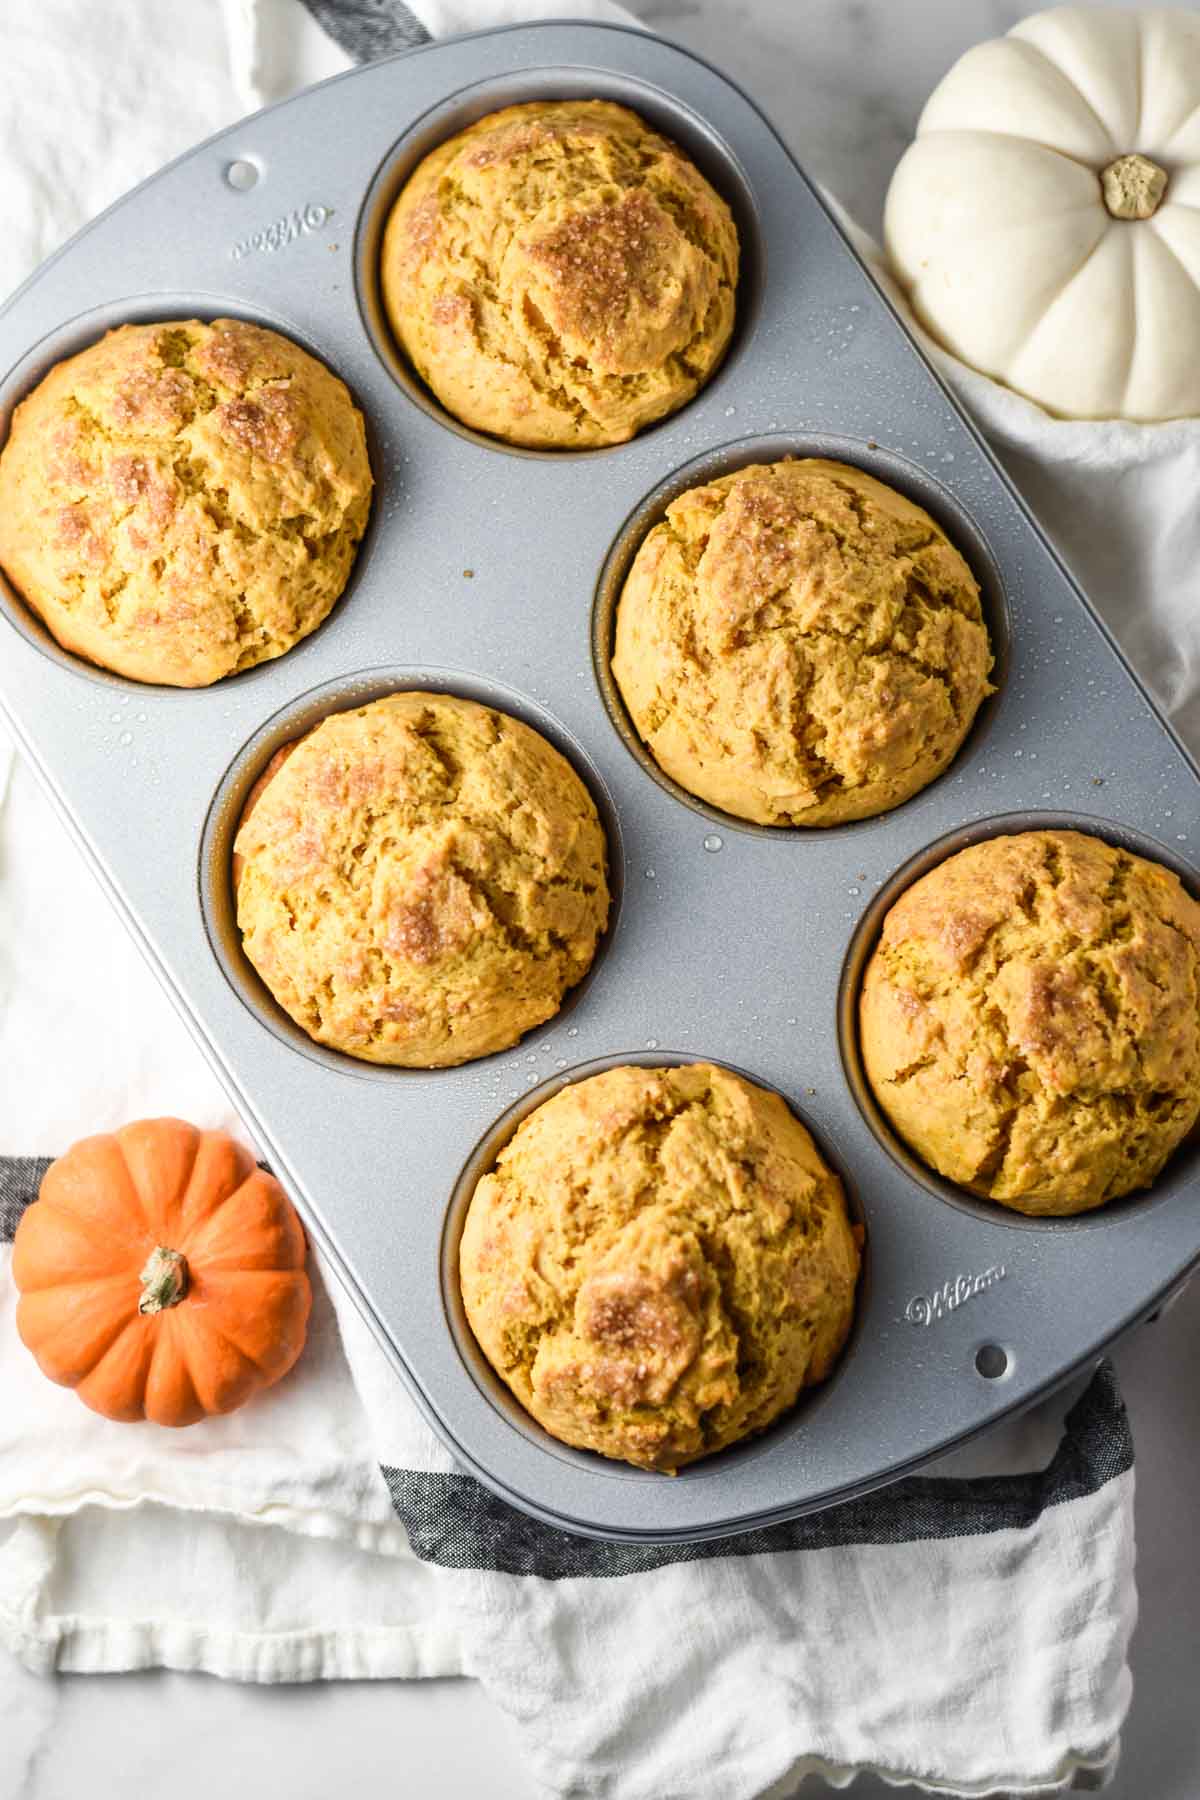 https://thedizzycook.com/wp-content/uploads/2022/11/pumpkin-muffins-in-baking-pan.jpg